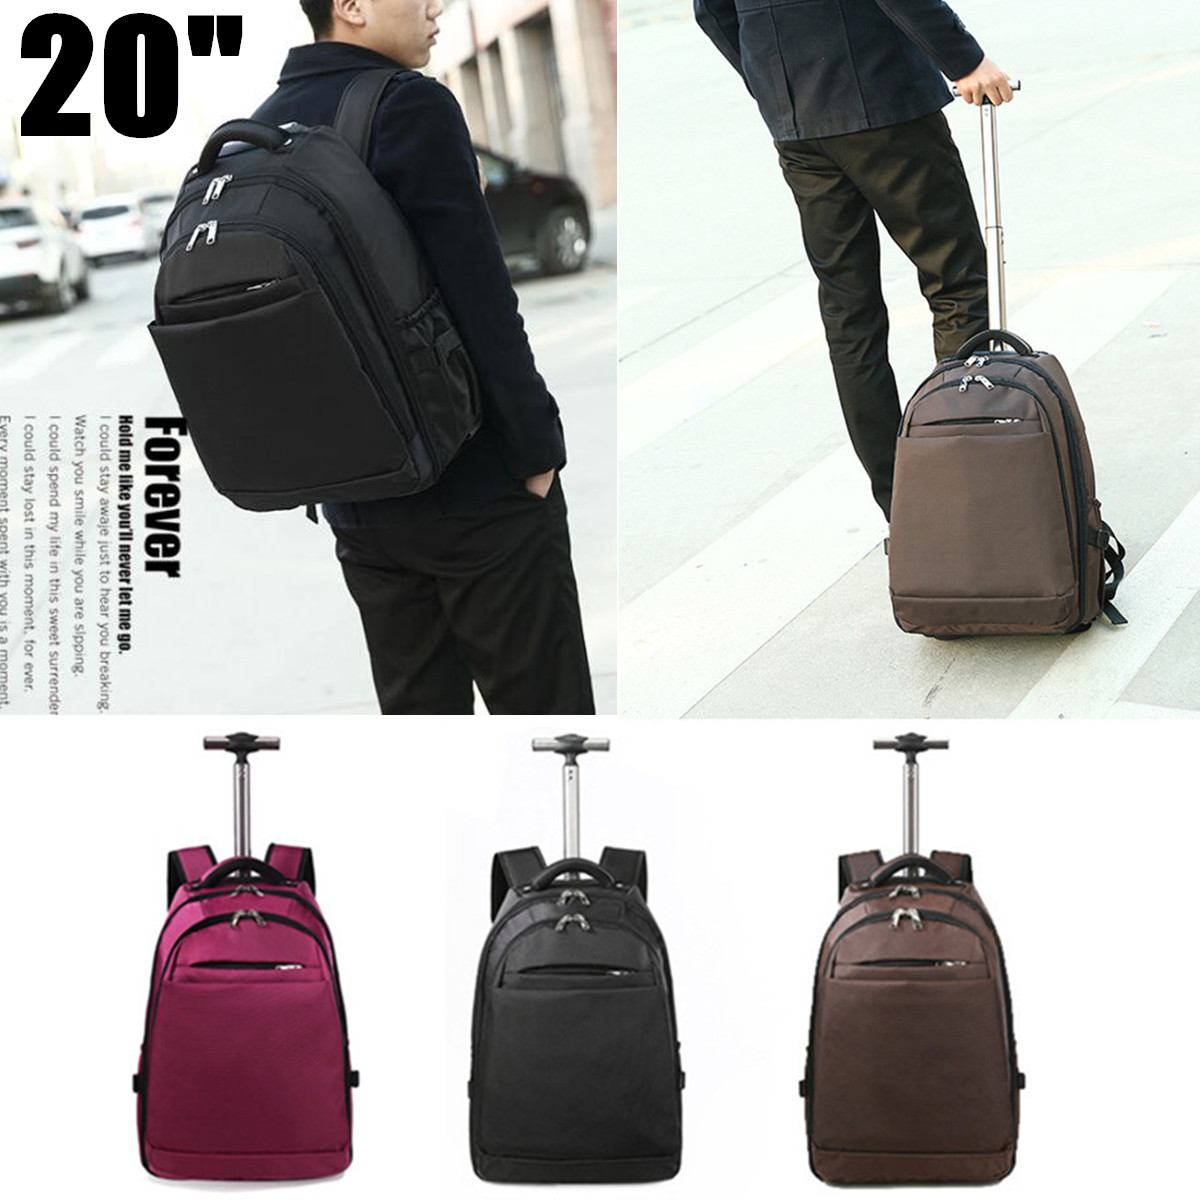 20-inch-Wheeled-Laptop-Trolley-Traveling-Suitcase-Luggage-Bag-Portable-Men-Backpack-Women-Rucksack-1595895-1